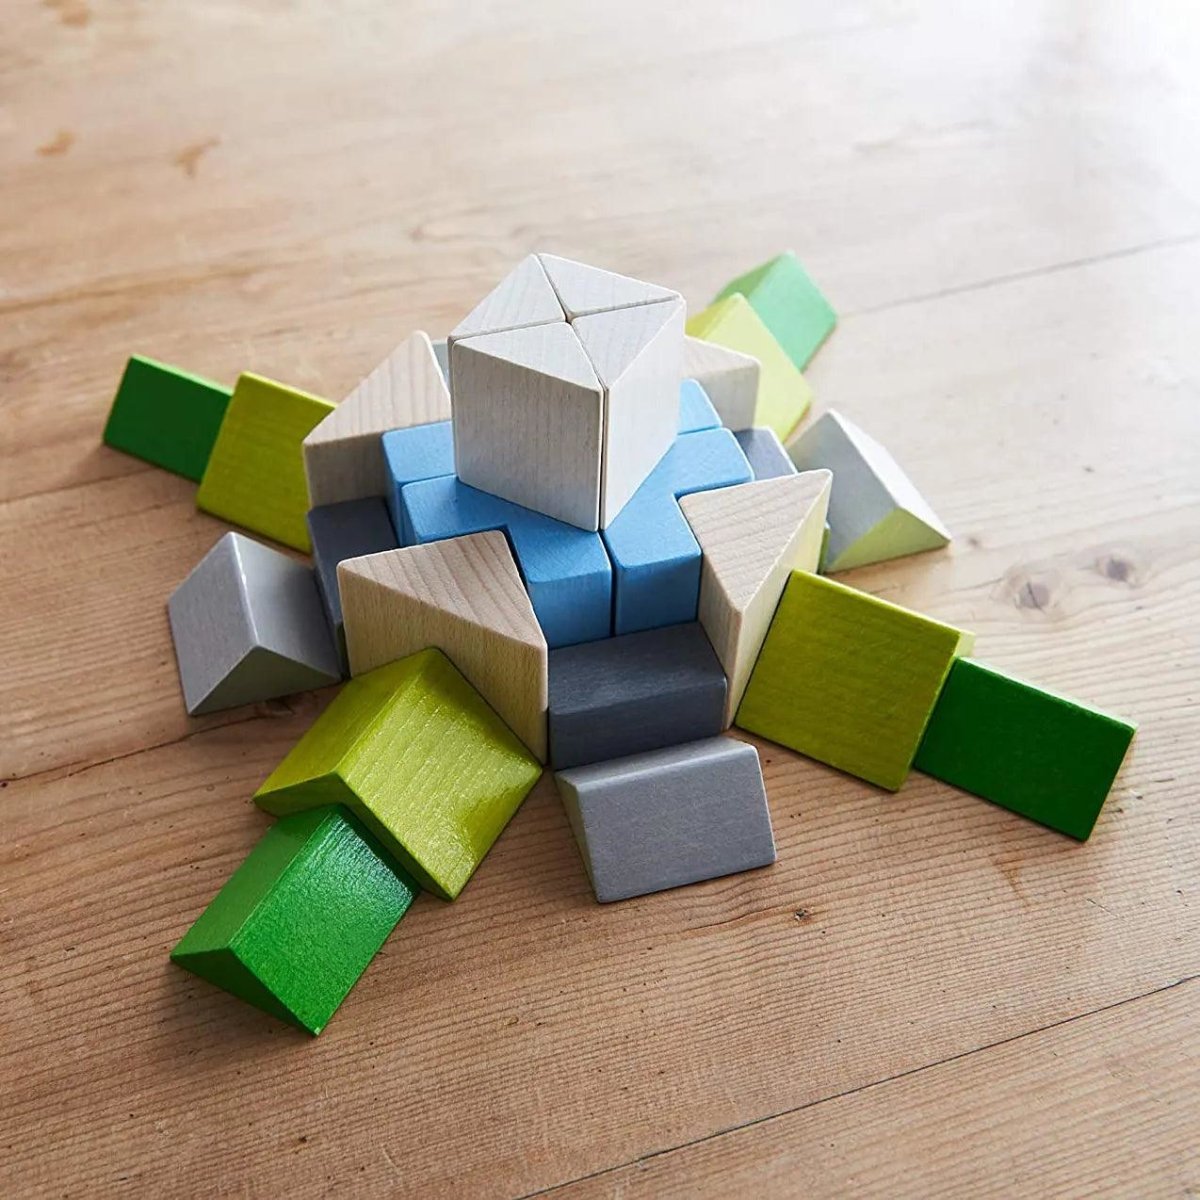 3D Wooden Block Mosaic Arranging Game - Zidar Kid